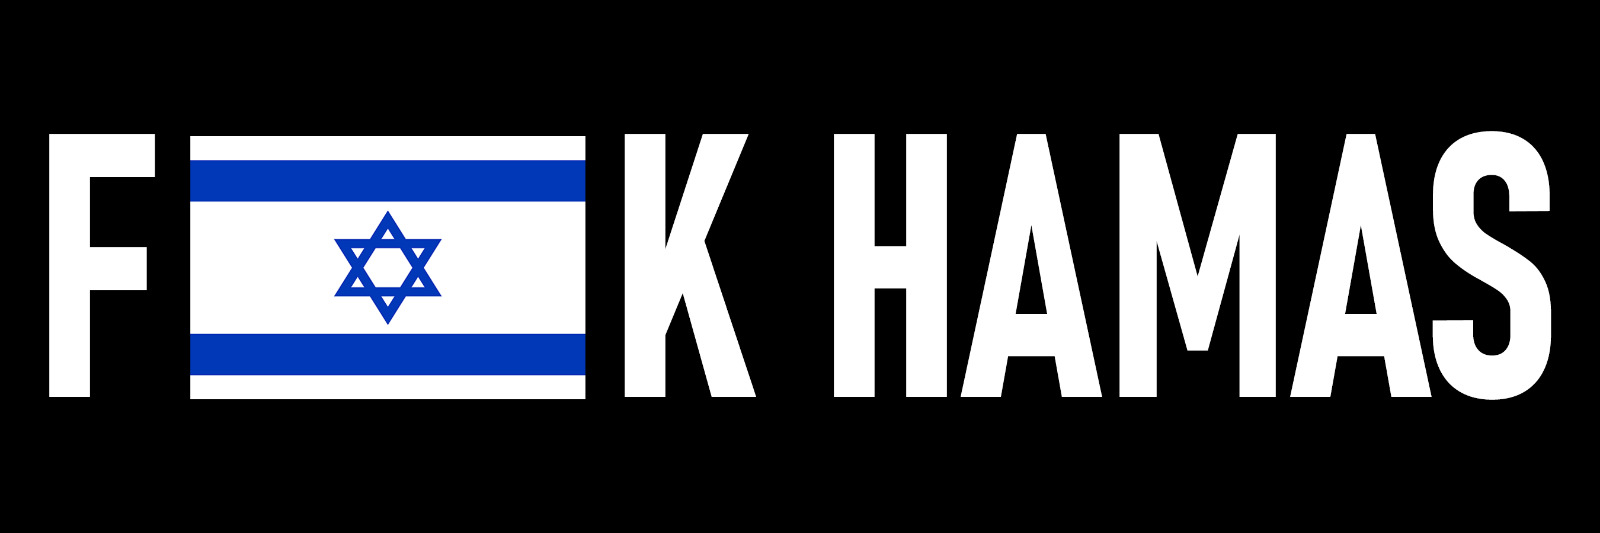 Support Israel Flag Bumper Sticker Pro Israel Against Gaza War Attack